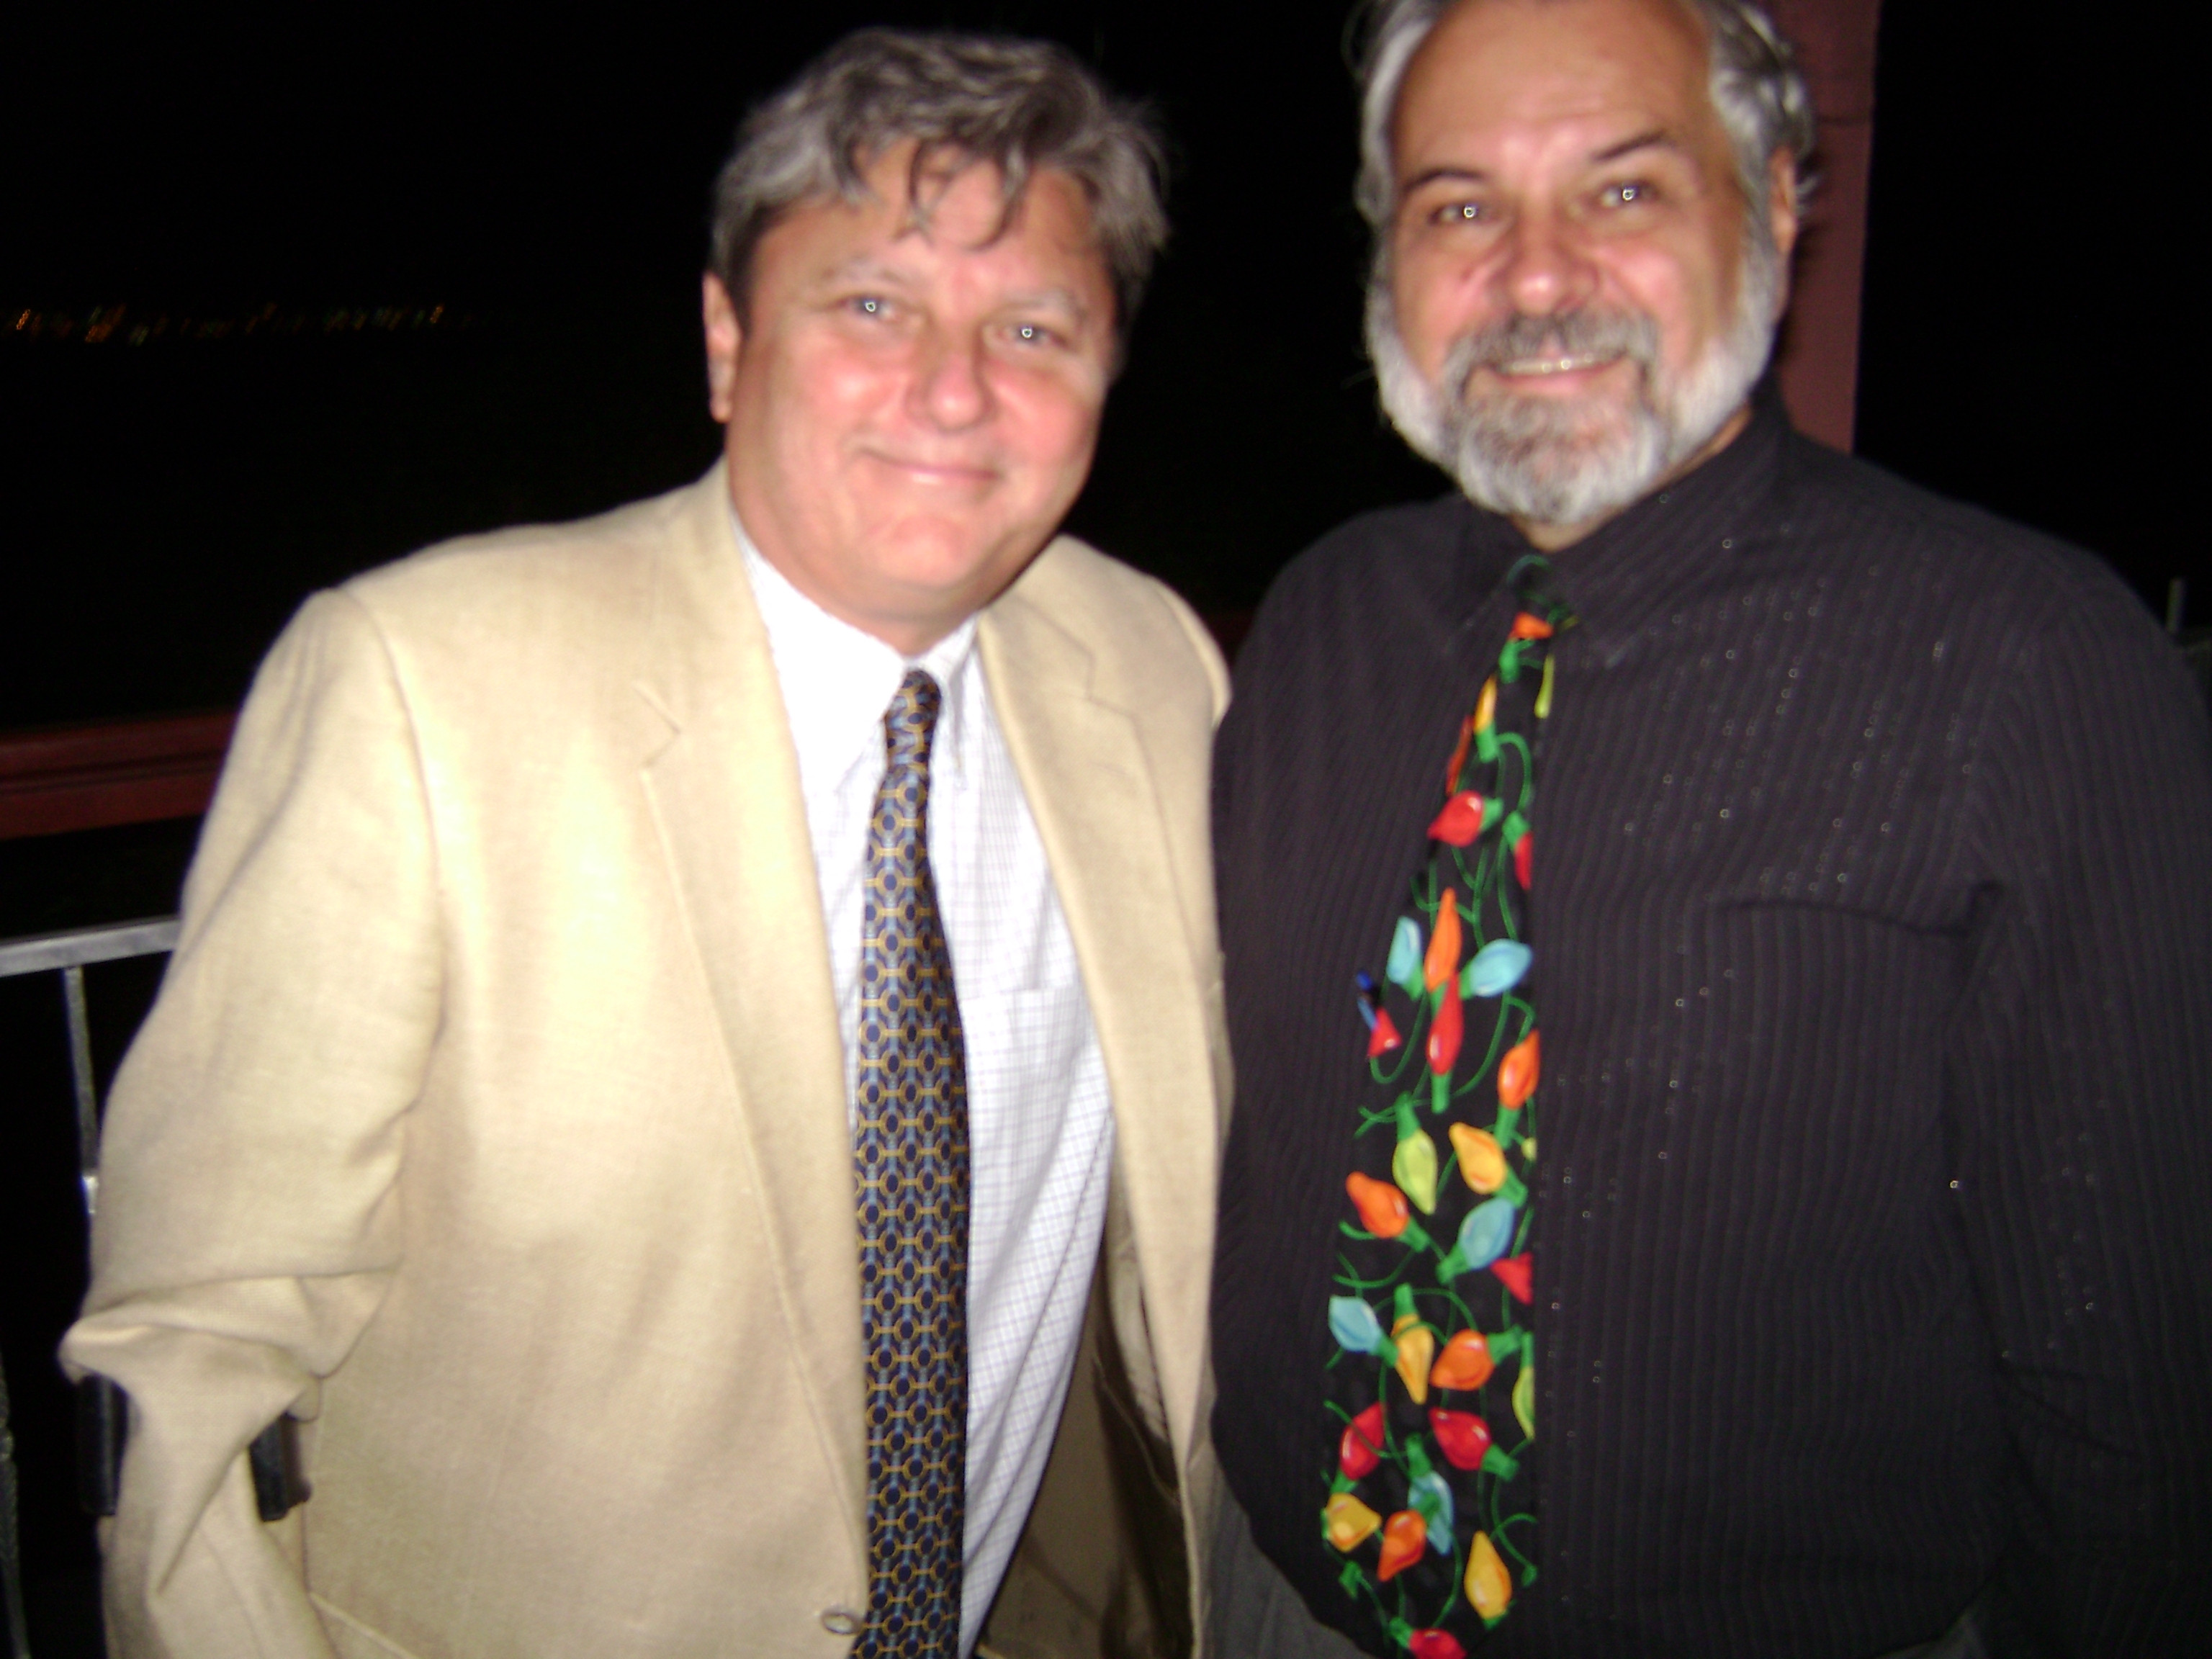 Filmmaker Artemis Joukowsky III (left) with Paul Chakroff, executive director of the St. Croix Environmental Association.